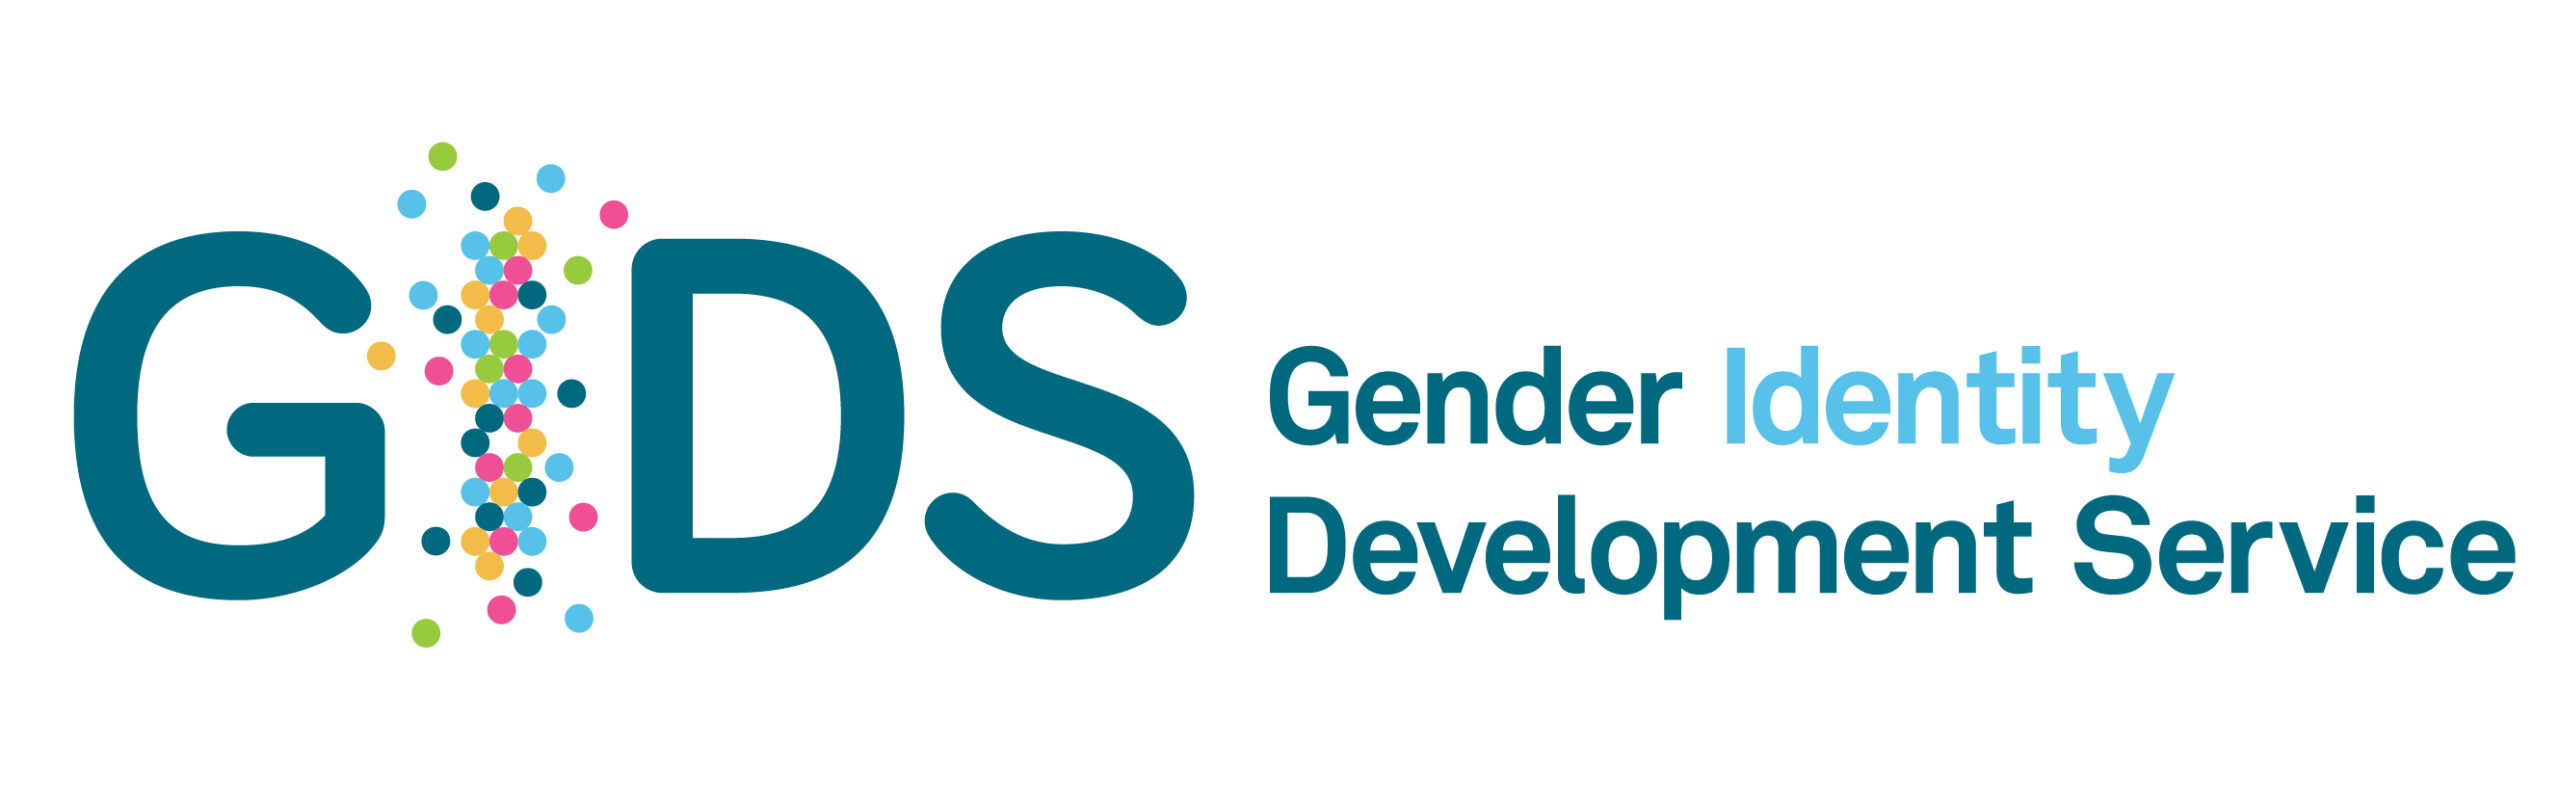 GIDS logo